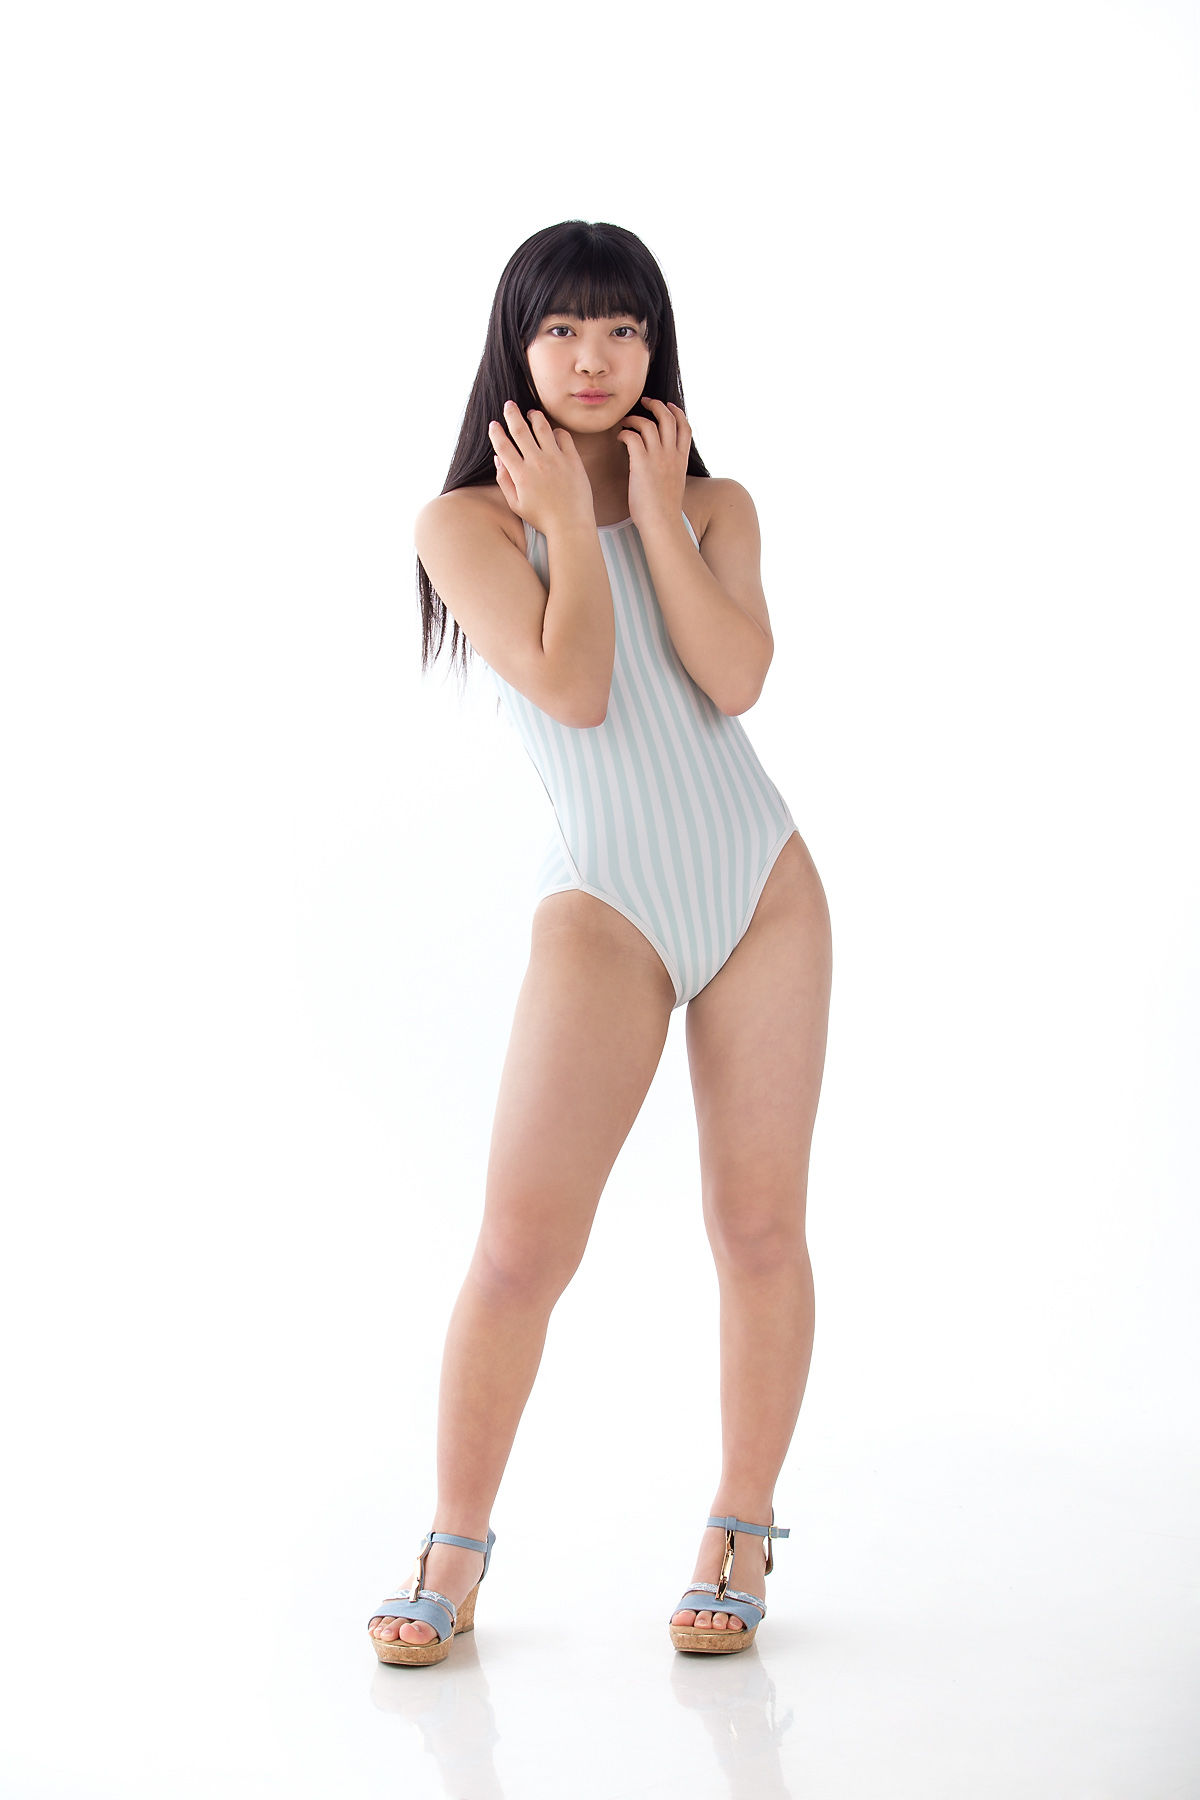 [Minisuka.tv] Saria Natsume 夏目咲莉愛 - Premium Gallery 3.1